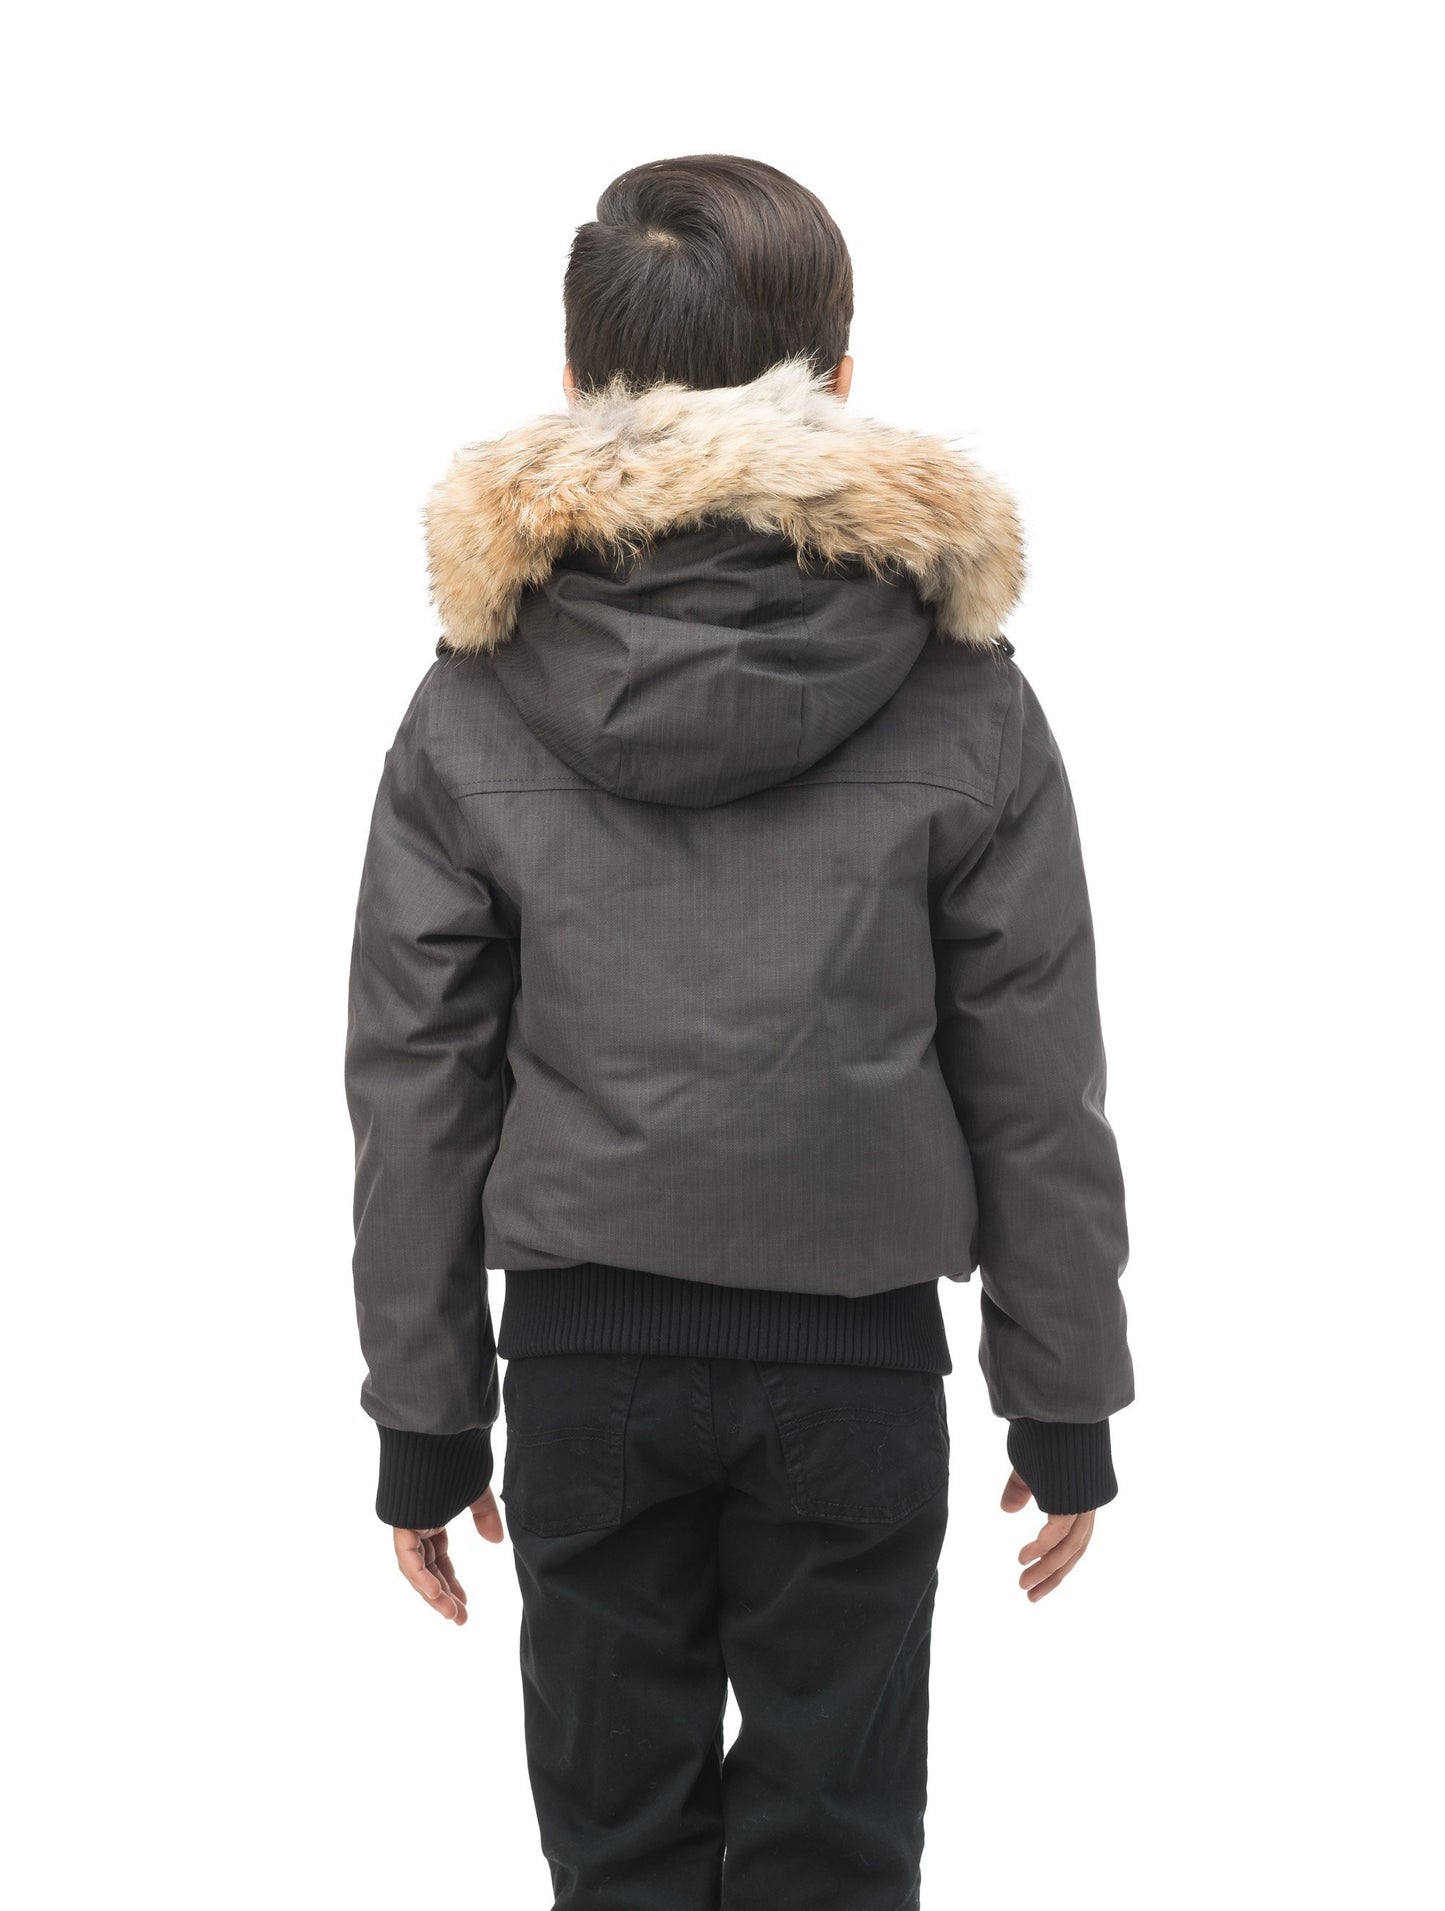 Kid's waist length down bomber jacket with fur trim hood in CH Steel Grey